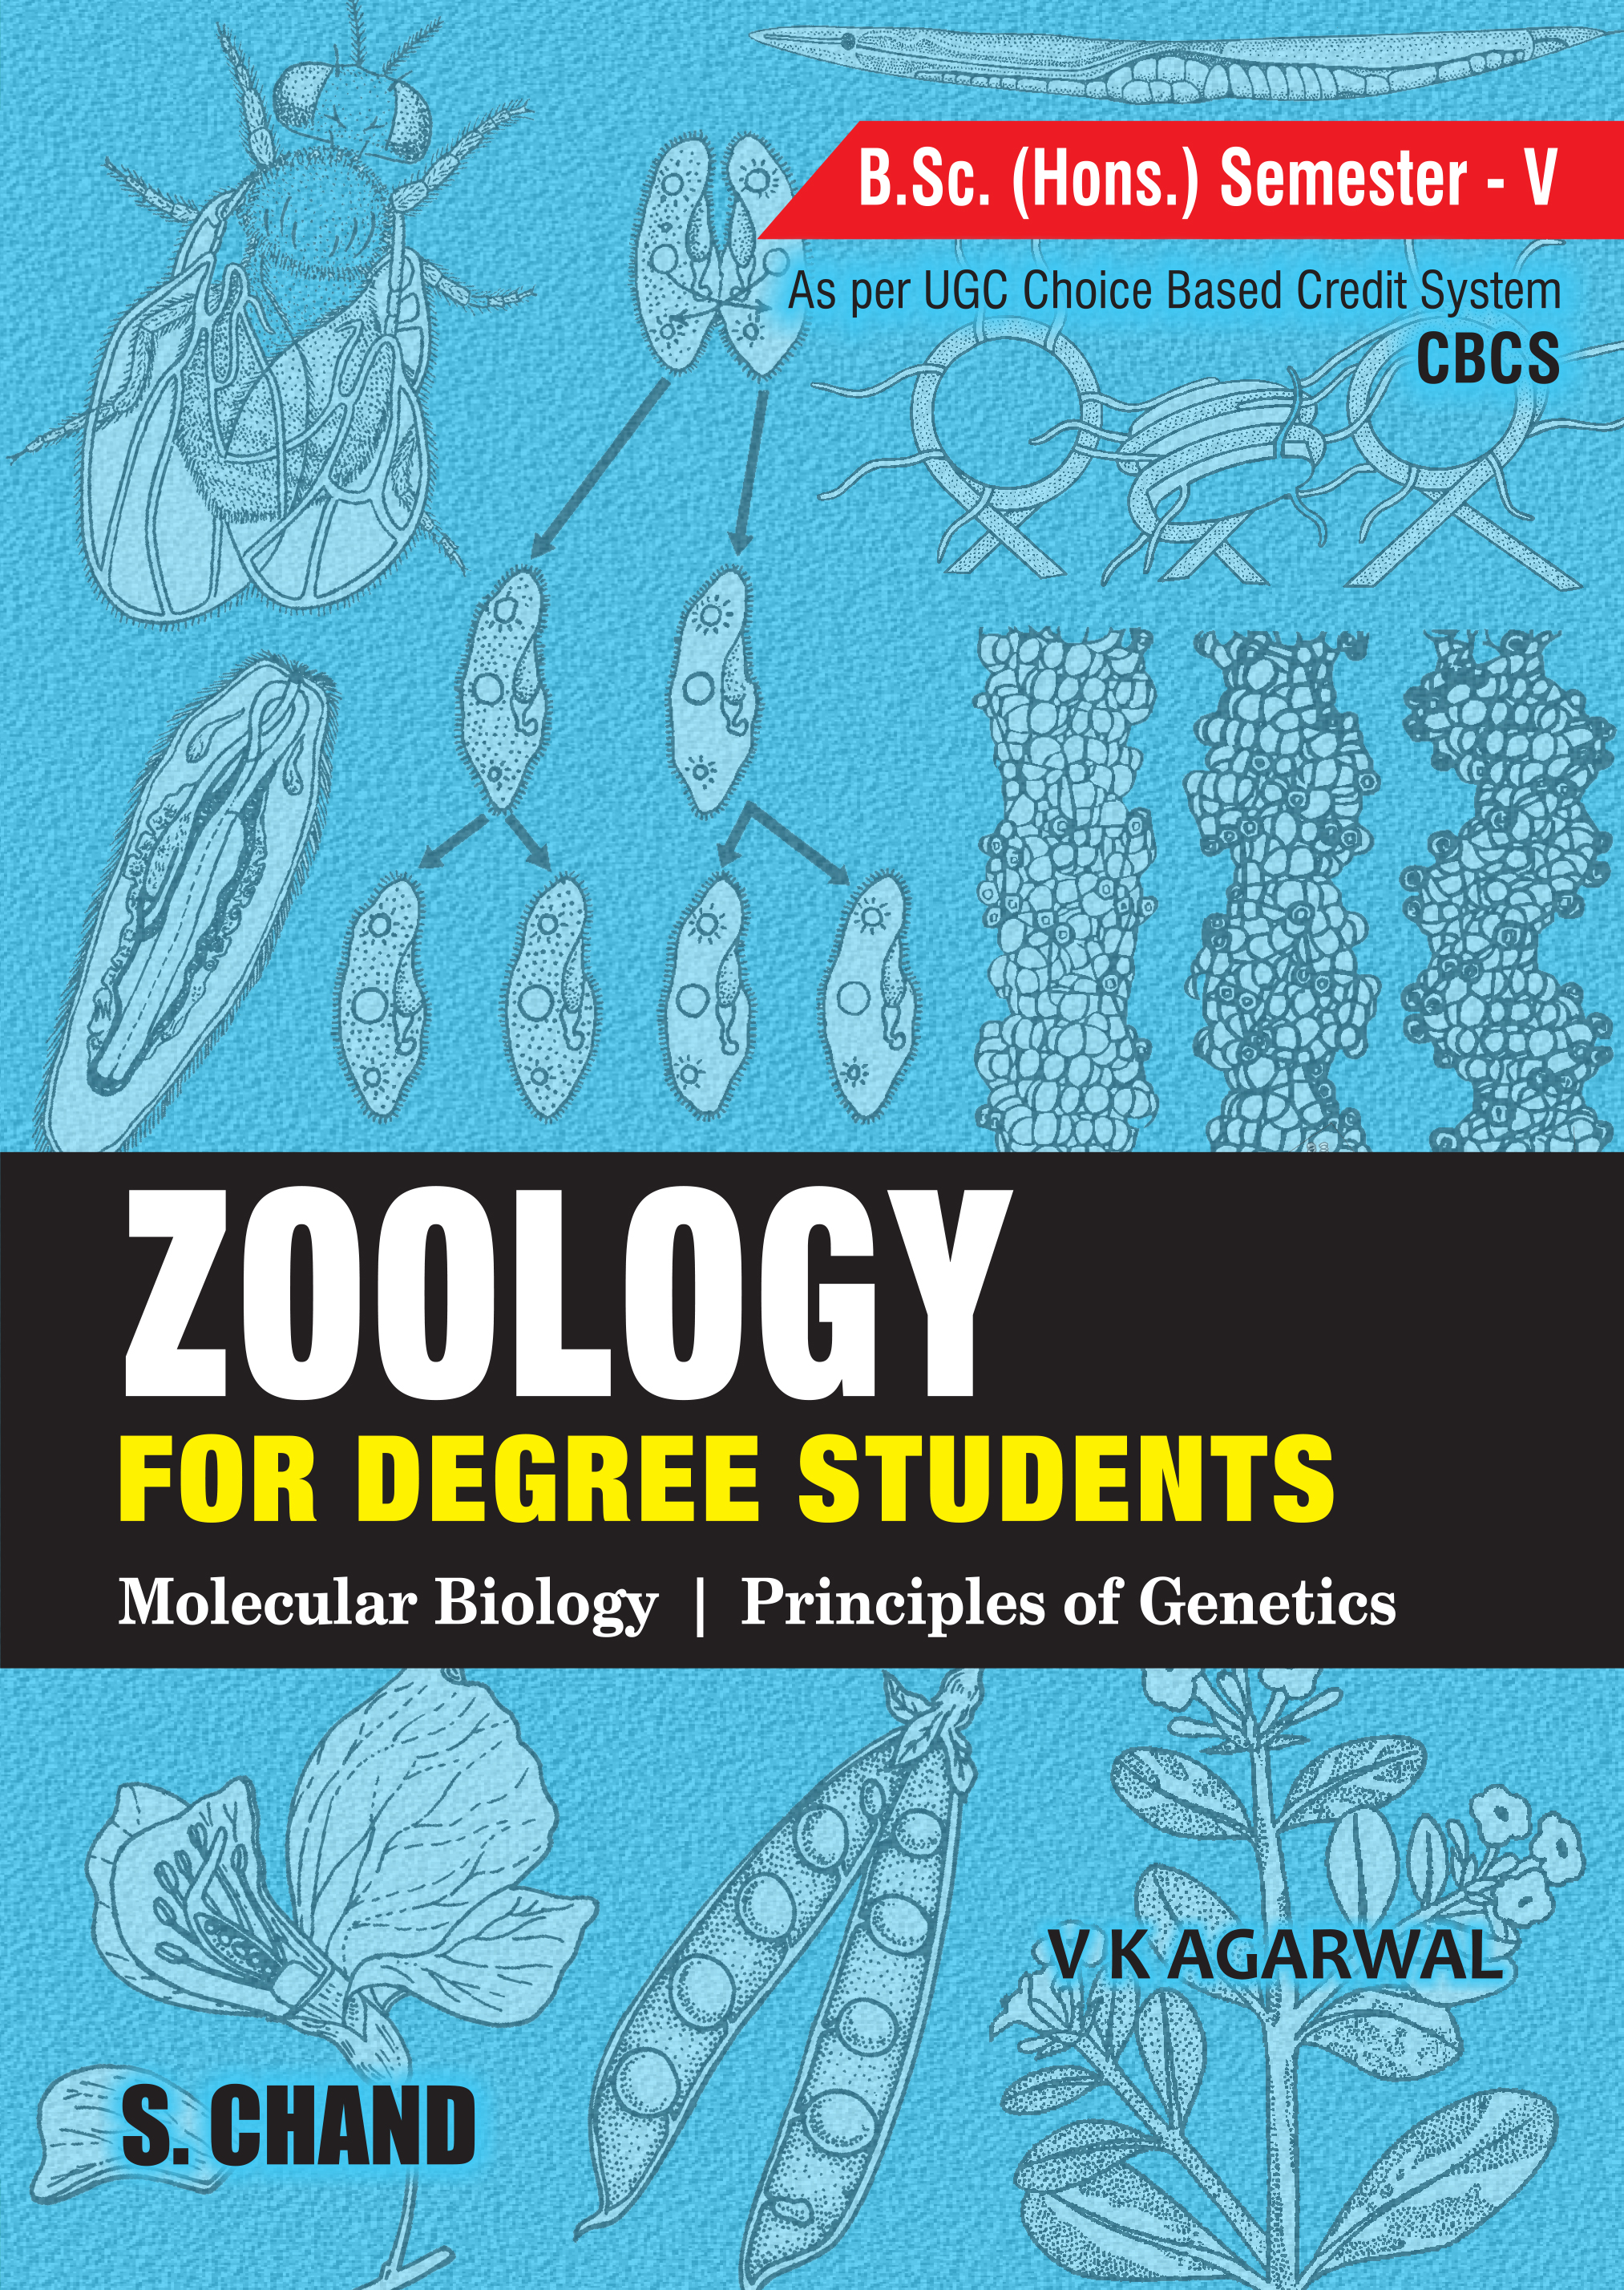 Zoology for Degree Students [B.Sc. (Hons.) Sem.-V, As per CBCS]